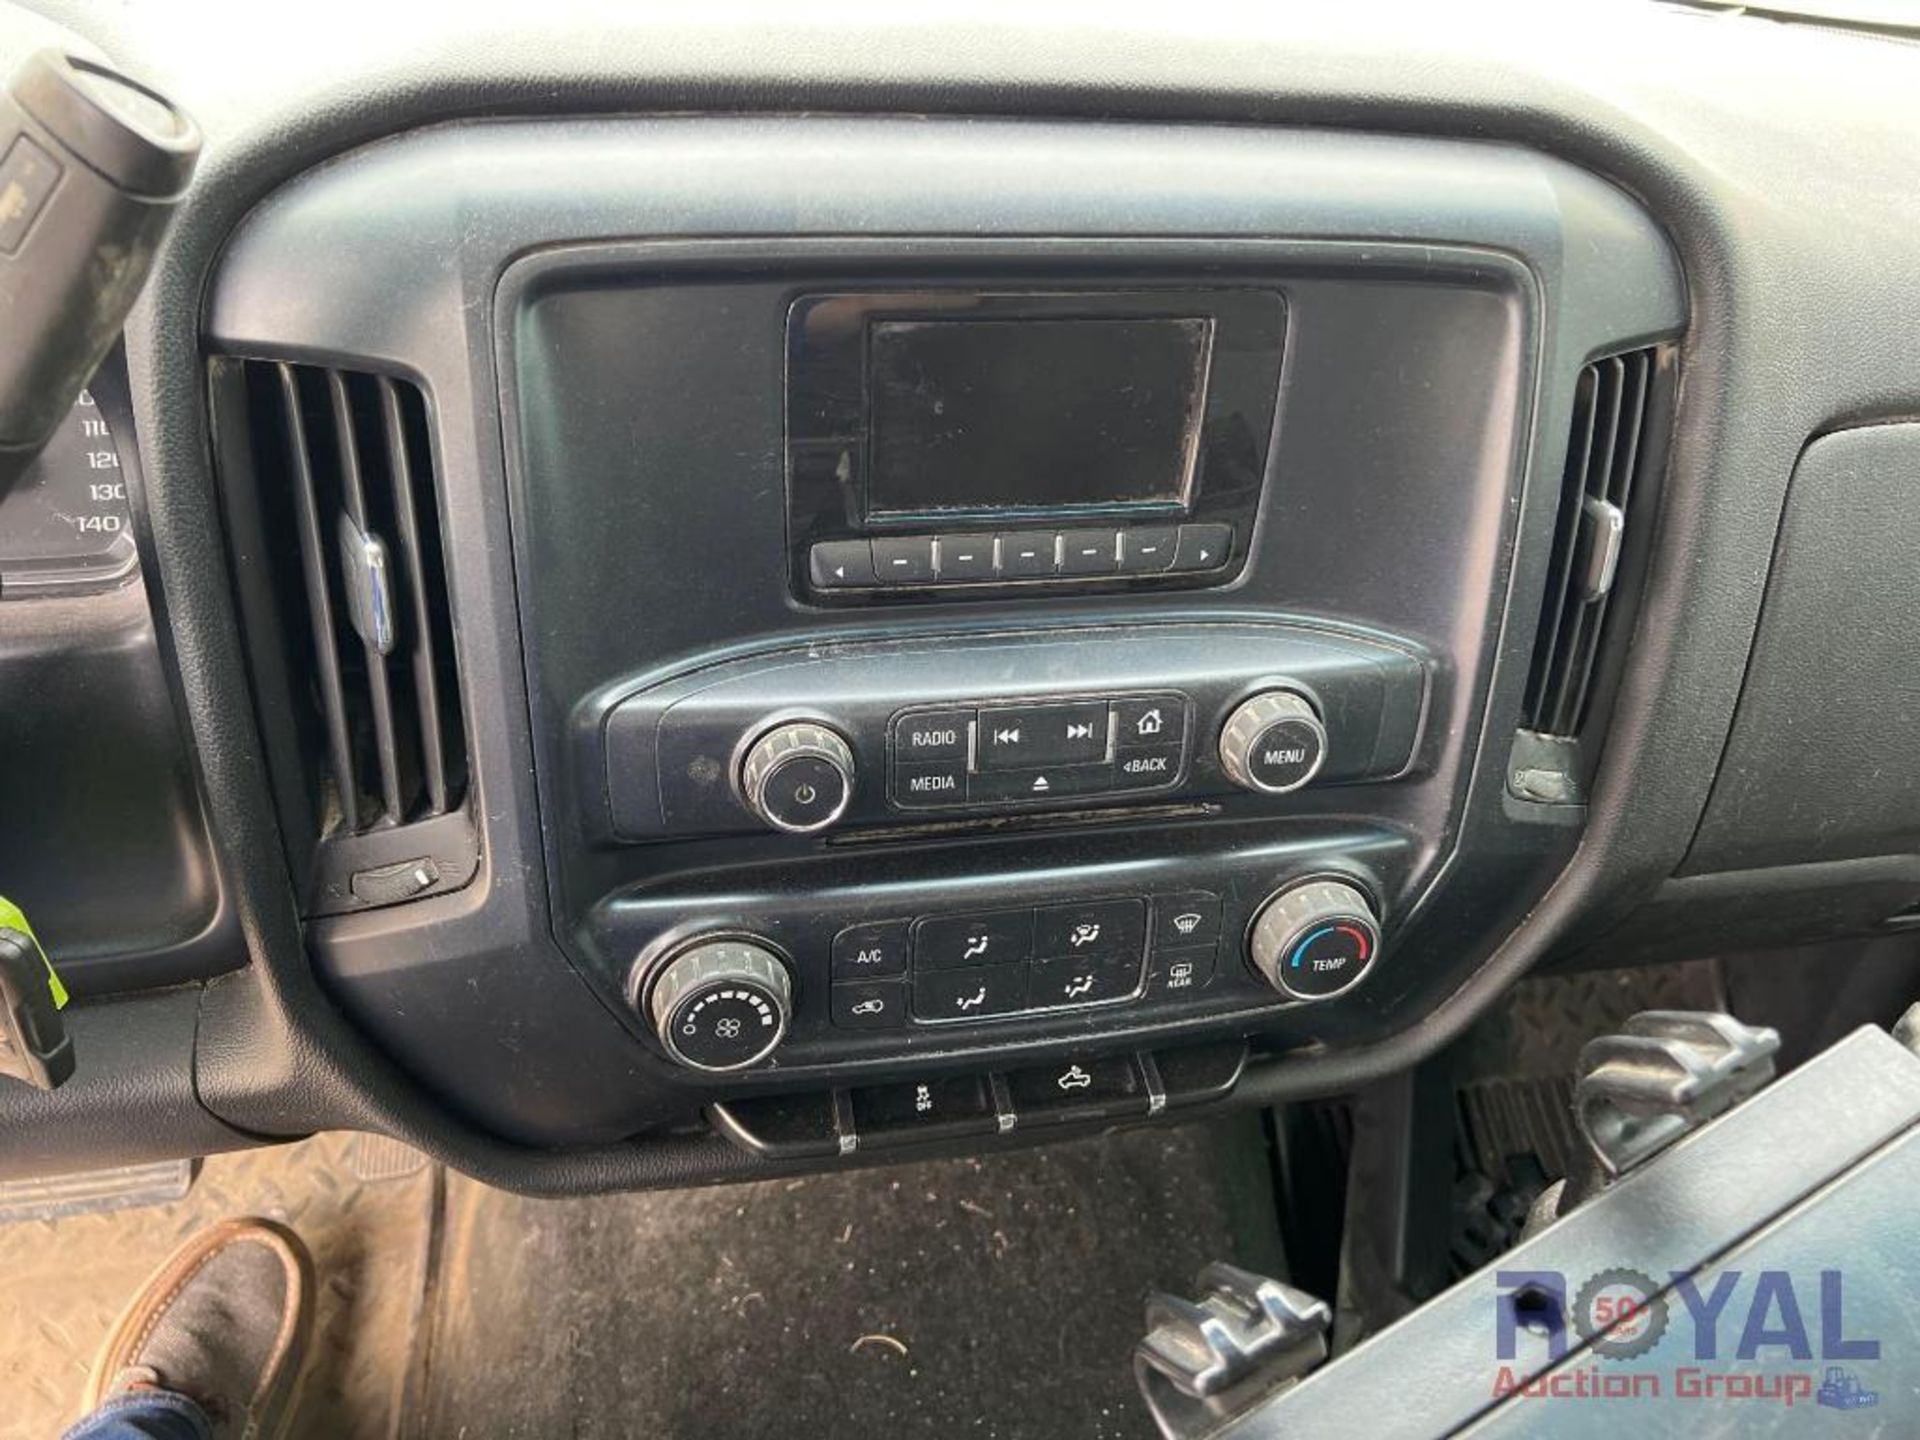 2014 Chevrolet Silverado 1500 4x4 Crew Cab Pickup Truck - Image 22 of 45